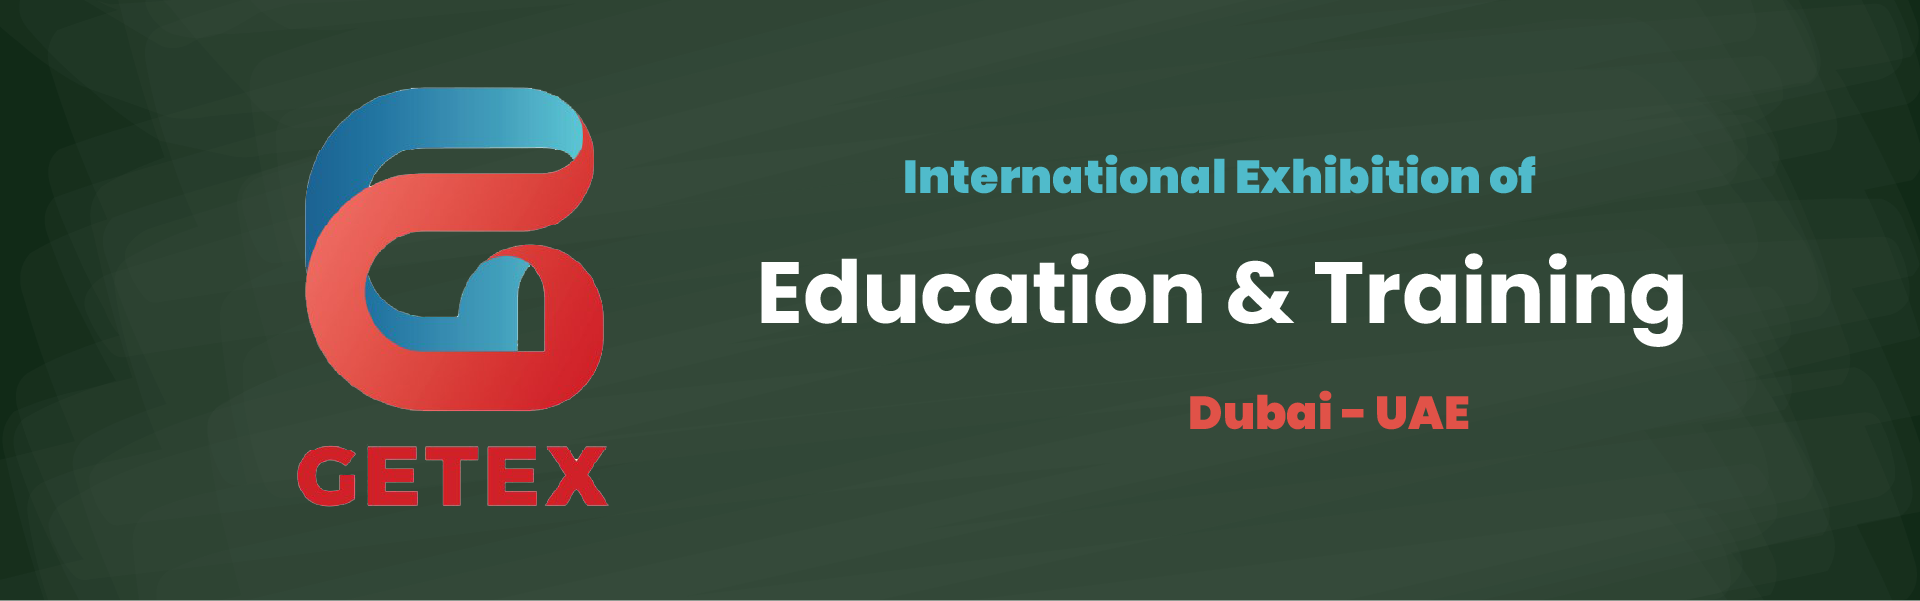 Education & Training (GETEX) Exhibition Dubai United Arab Emirates